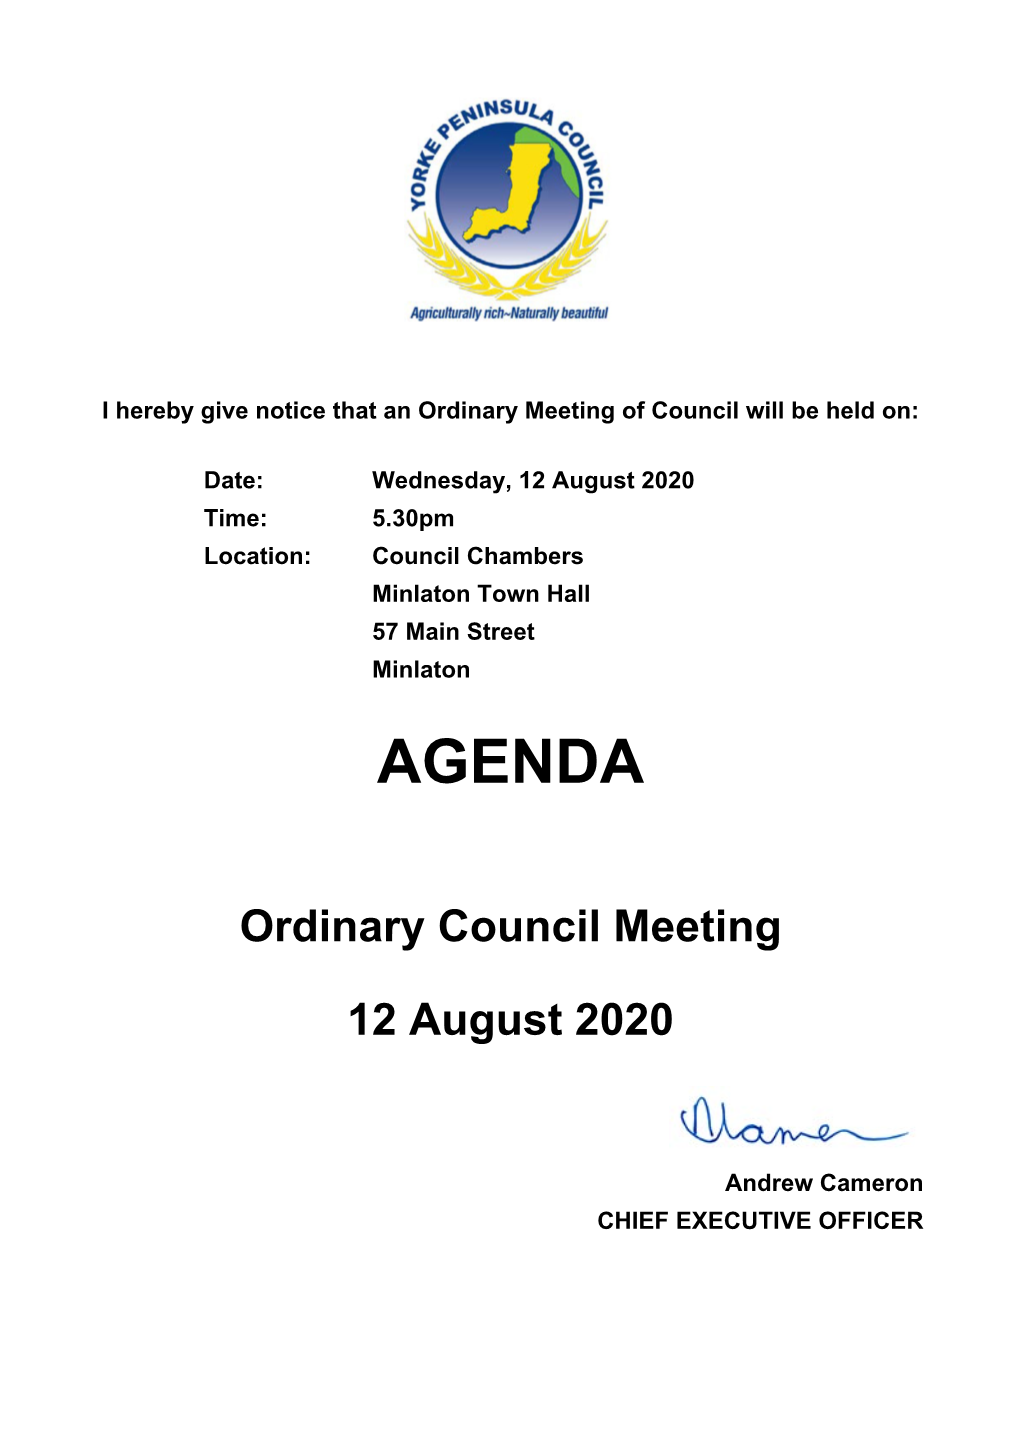 Council Agenda – 12 August 2020